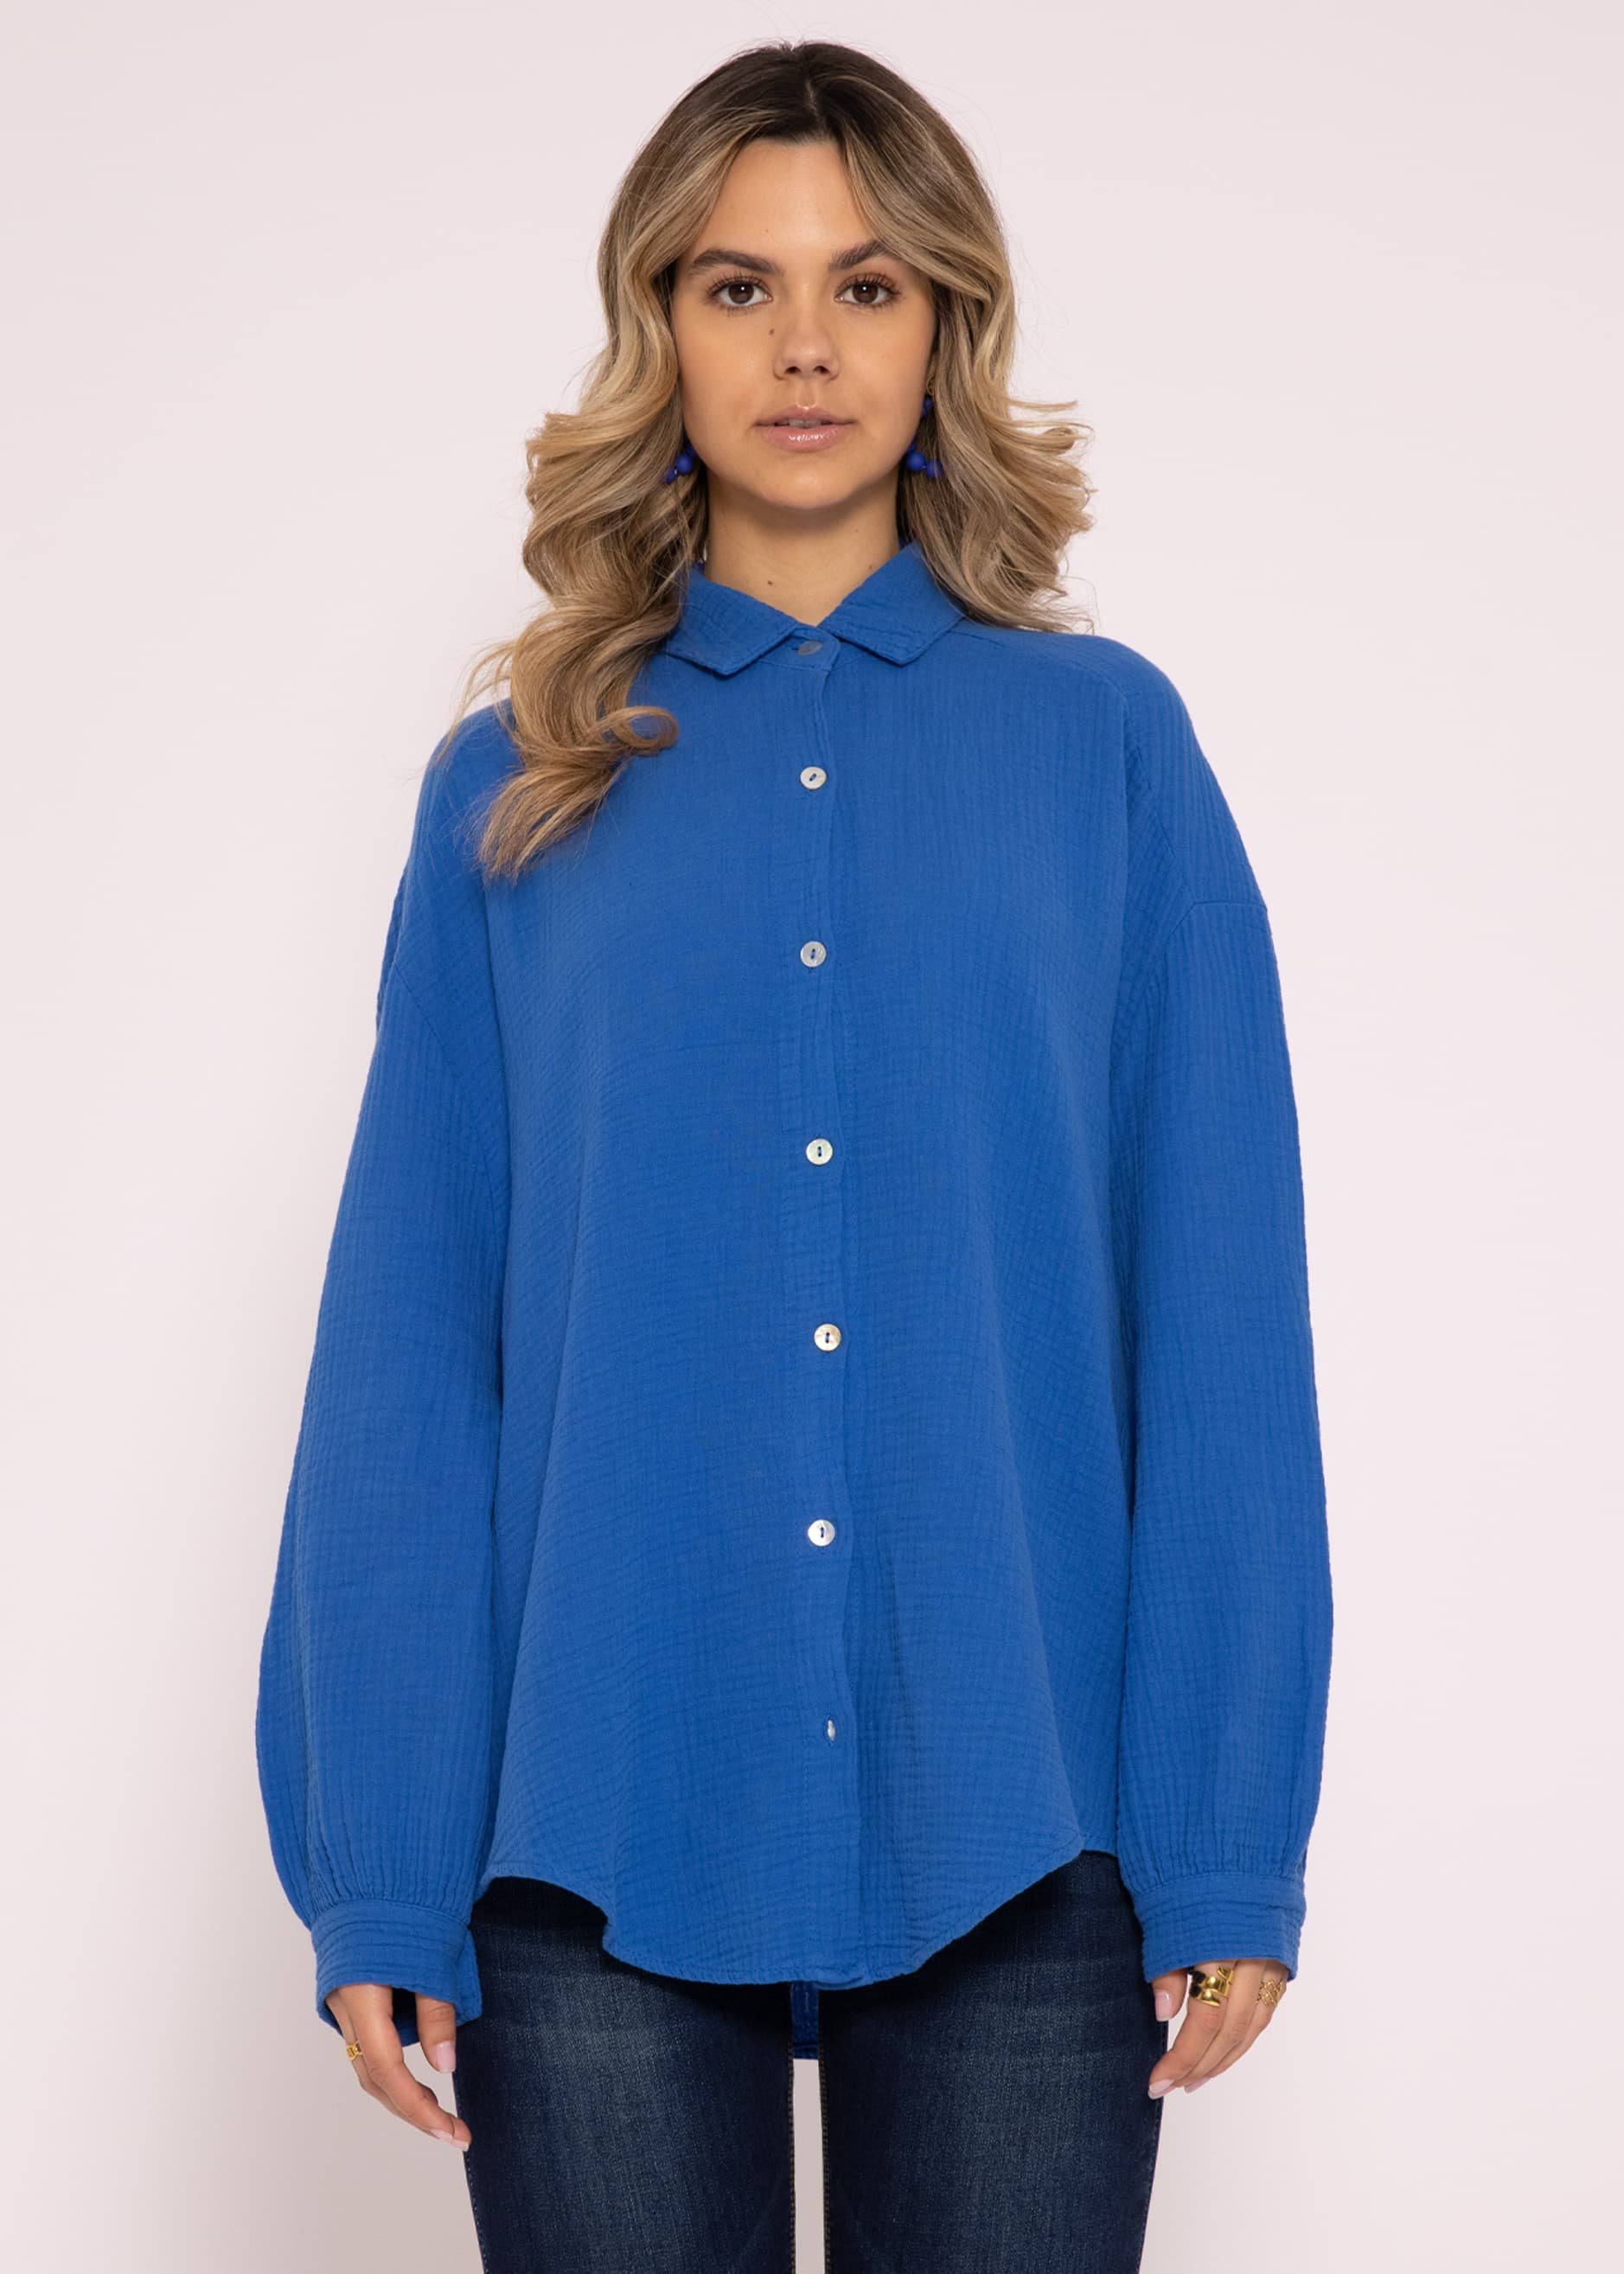 Longbluse mit Damen Musselin SASSYCLASSY Royalblau 36-48) Langarm Oversize aus Baumwolle One (Gr. Bluse Size V-Ausschnitt, lang Hemdbluse